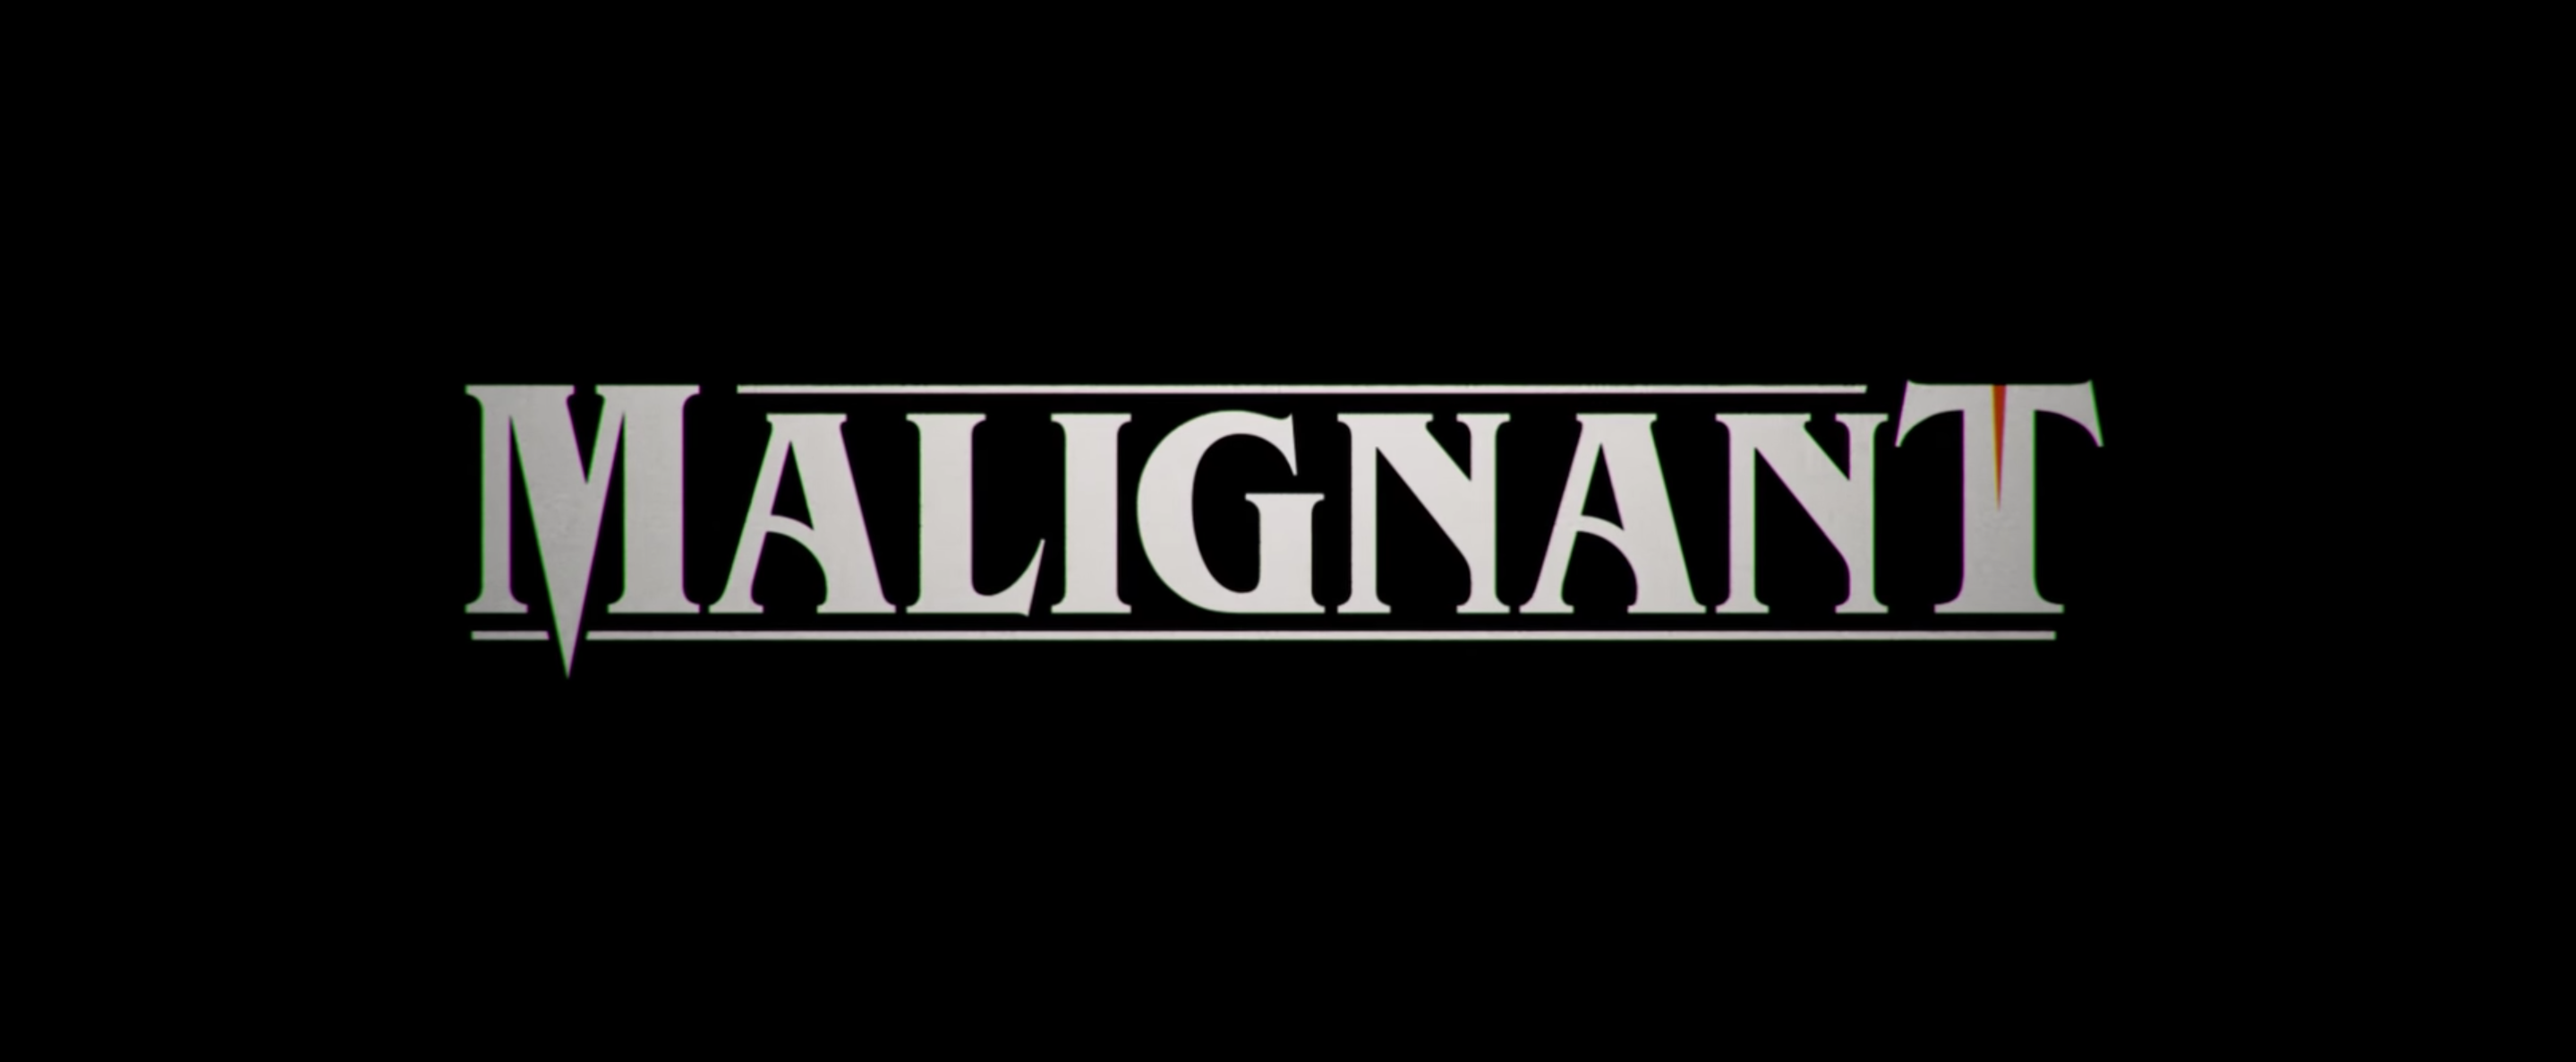 Cast malignant “Malignant on